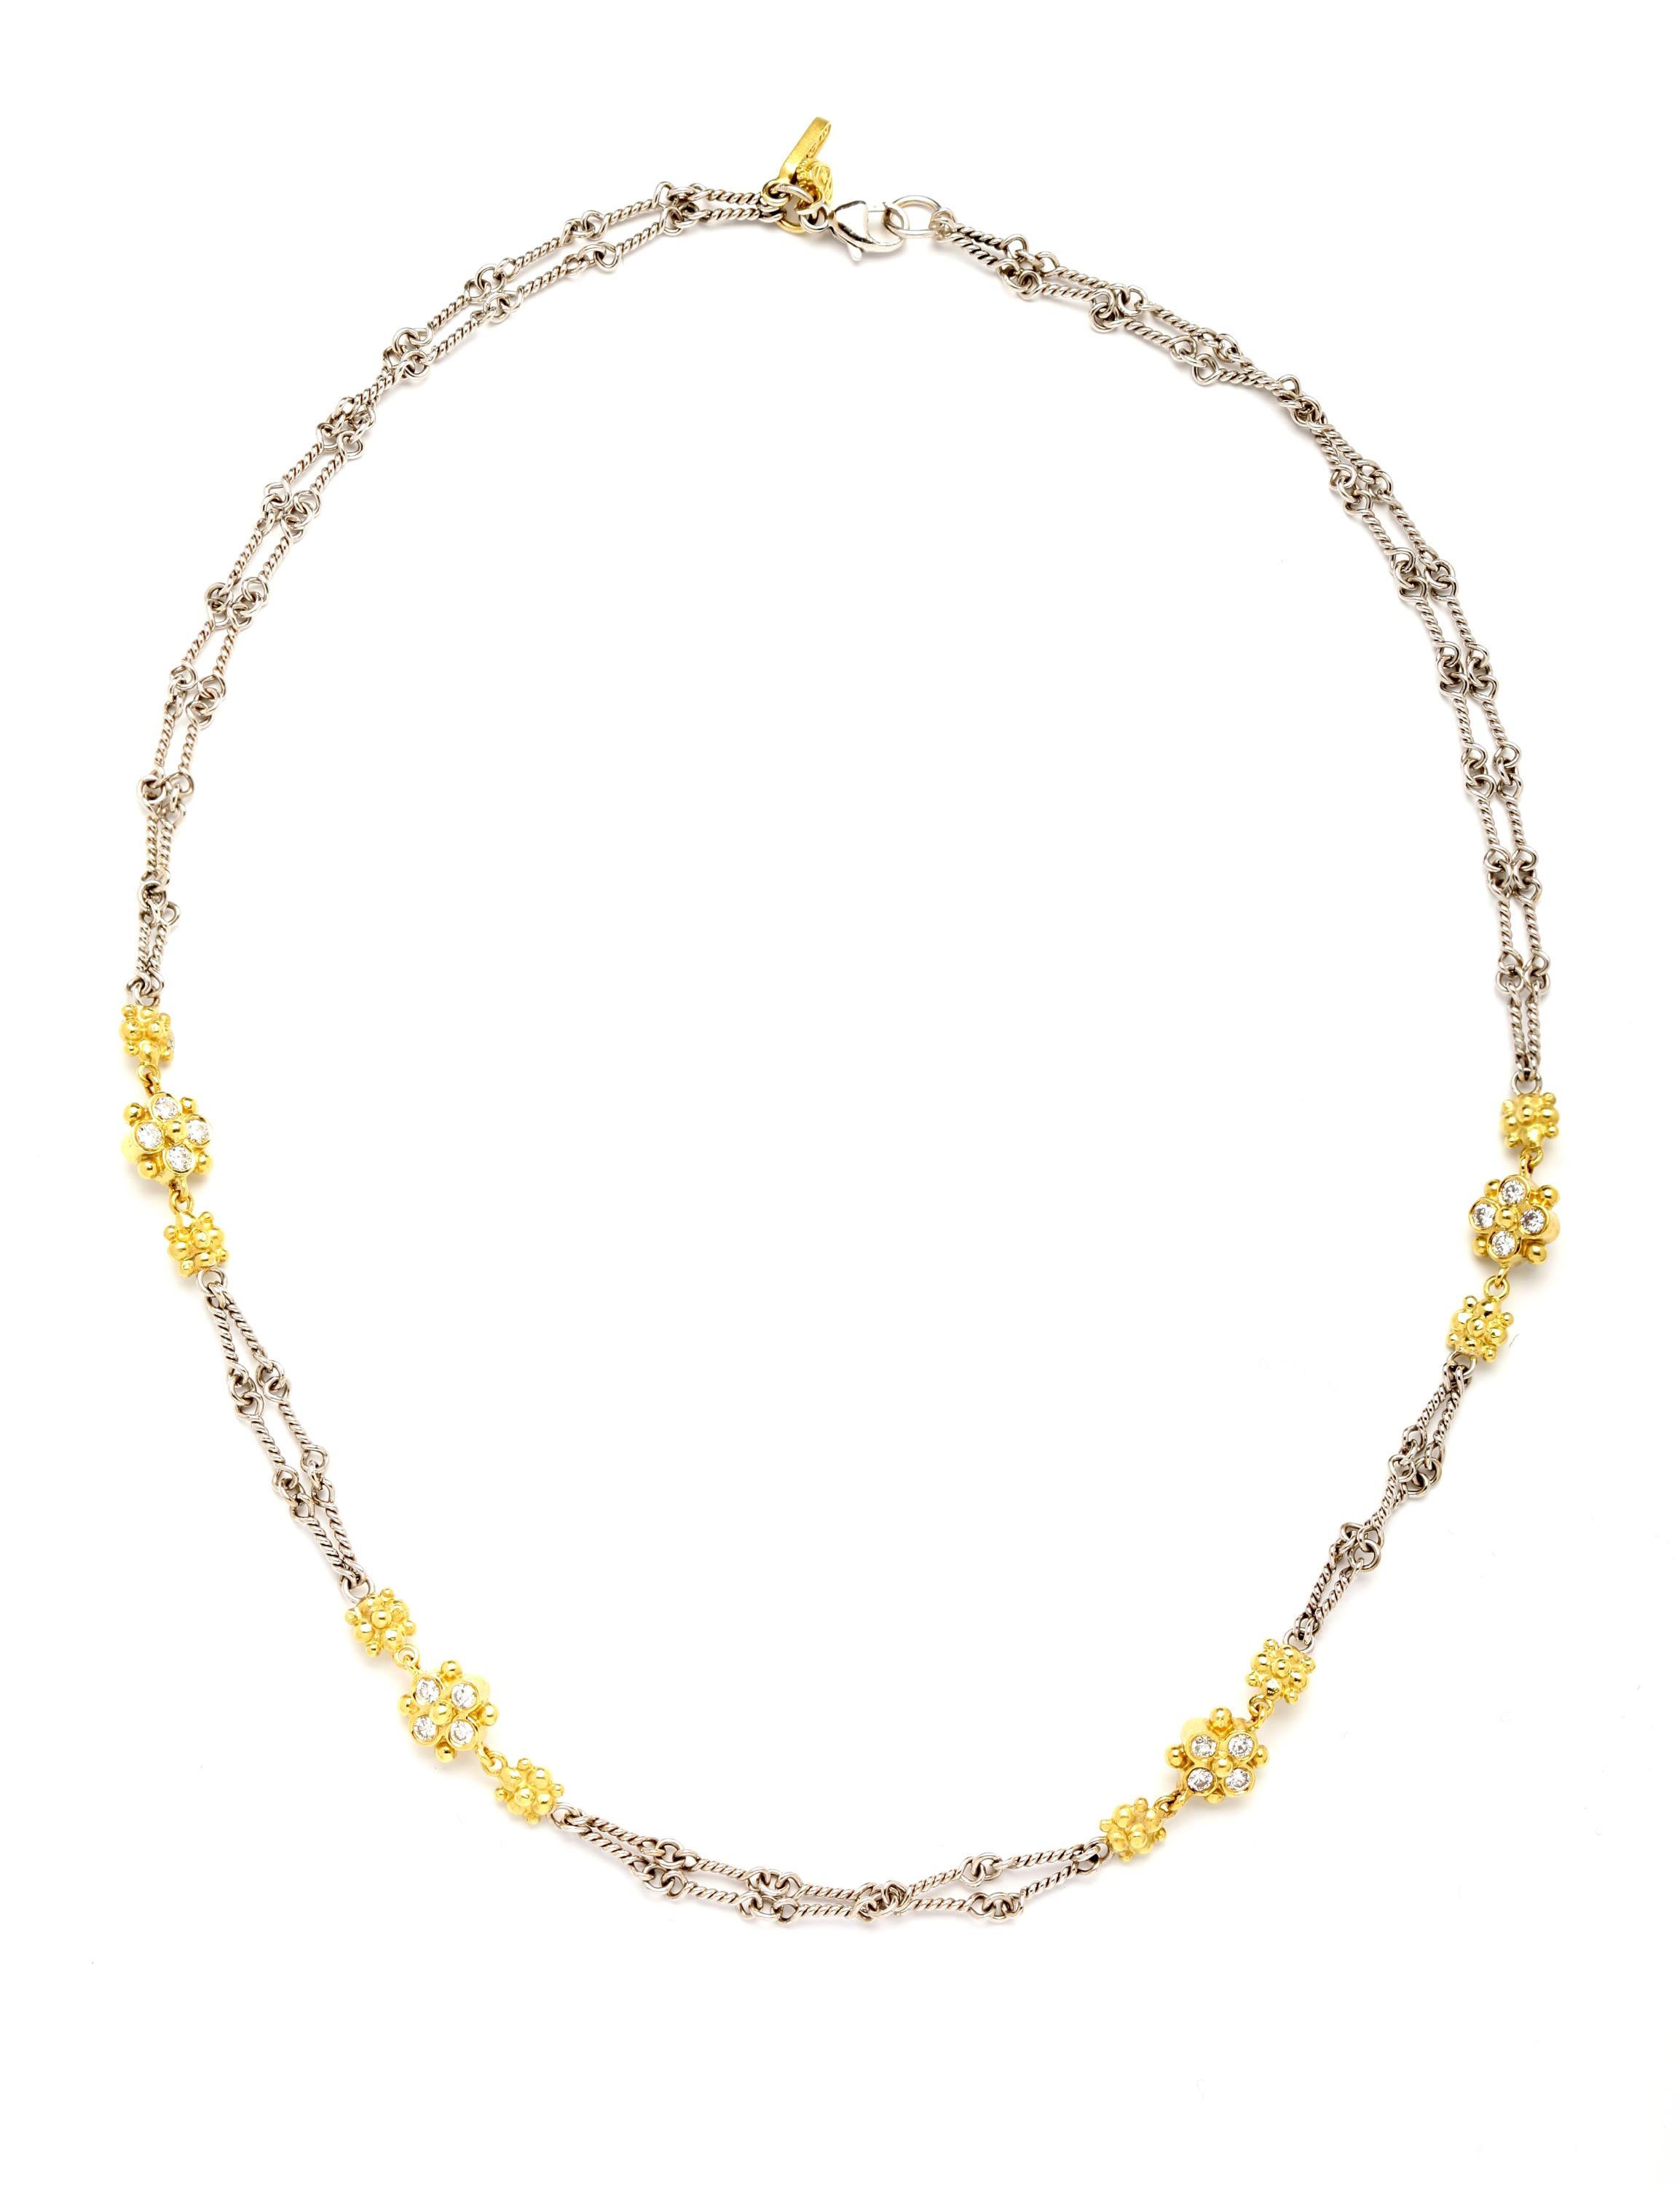 Taille ronde Stambolian, collier grappe de diamants bicolores 18 carats avec pendentif papillon en vente